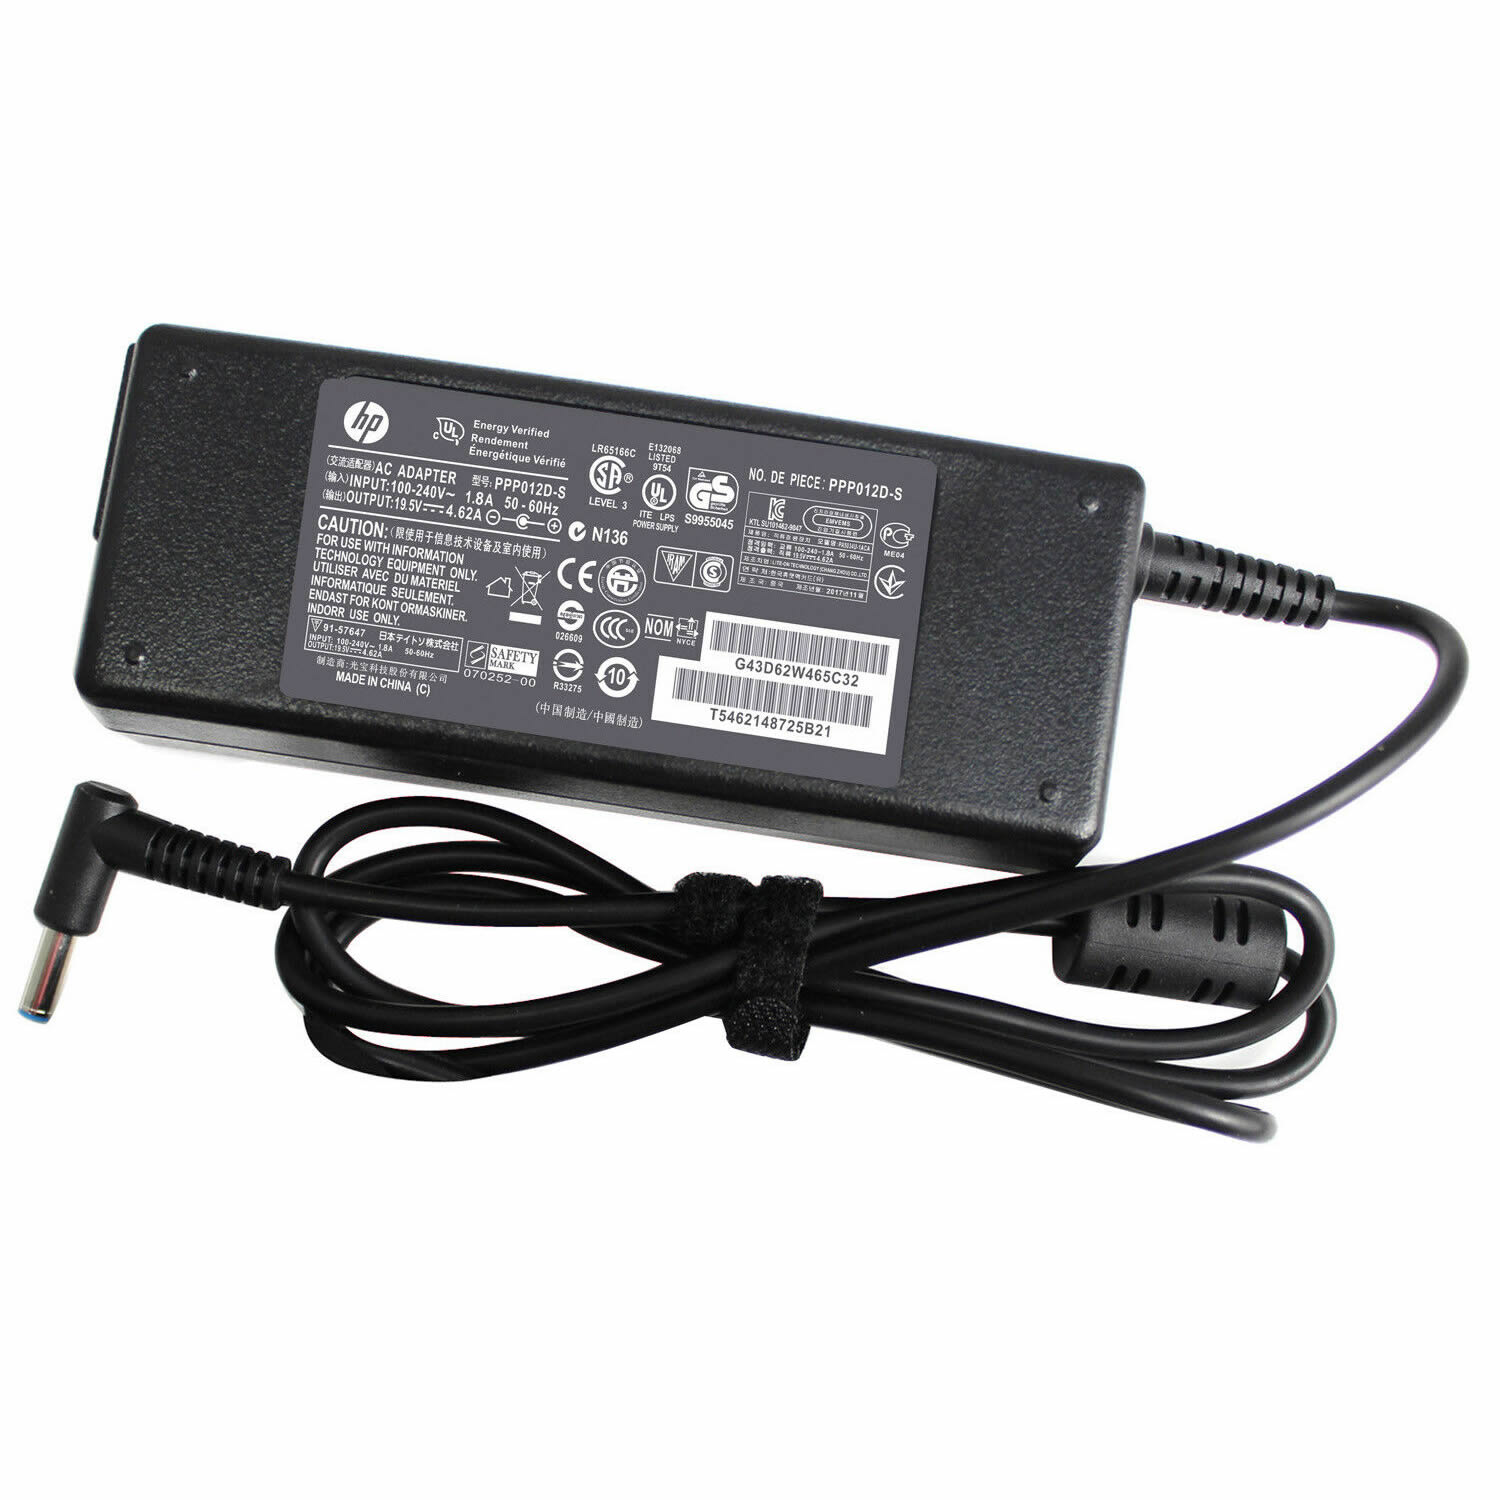 Adaptateur chargeur HP 710414-001,ADP-90WH D 19.5V 4.62A 88W alimentation originale pour HP ENVY 15z-j100 17t-j100 M6-k010dx M6-k022dx séries